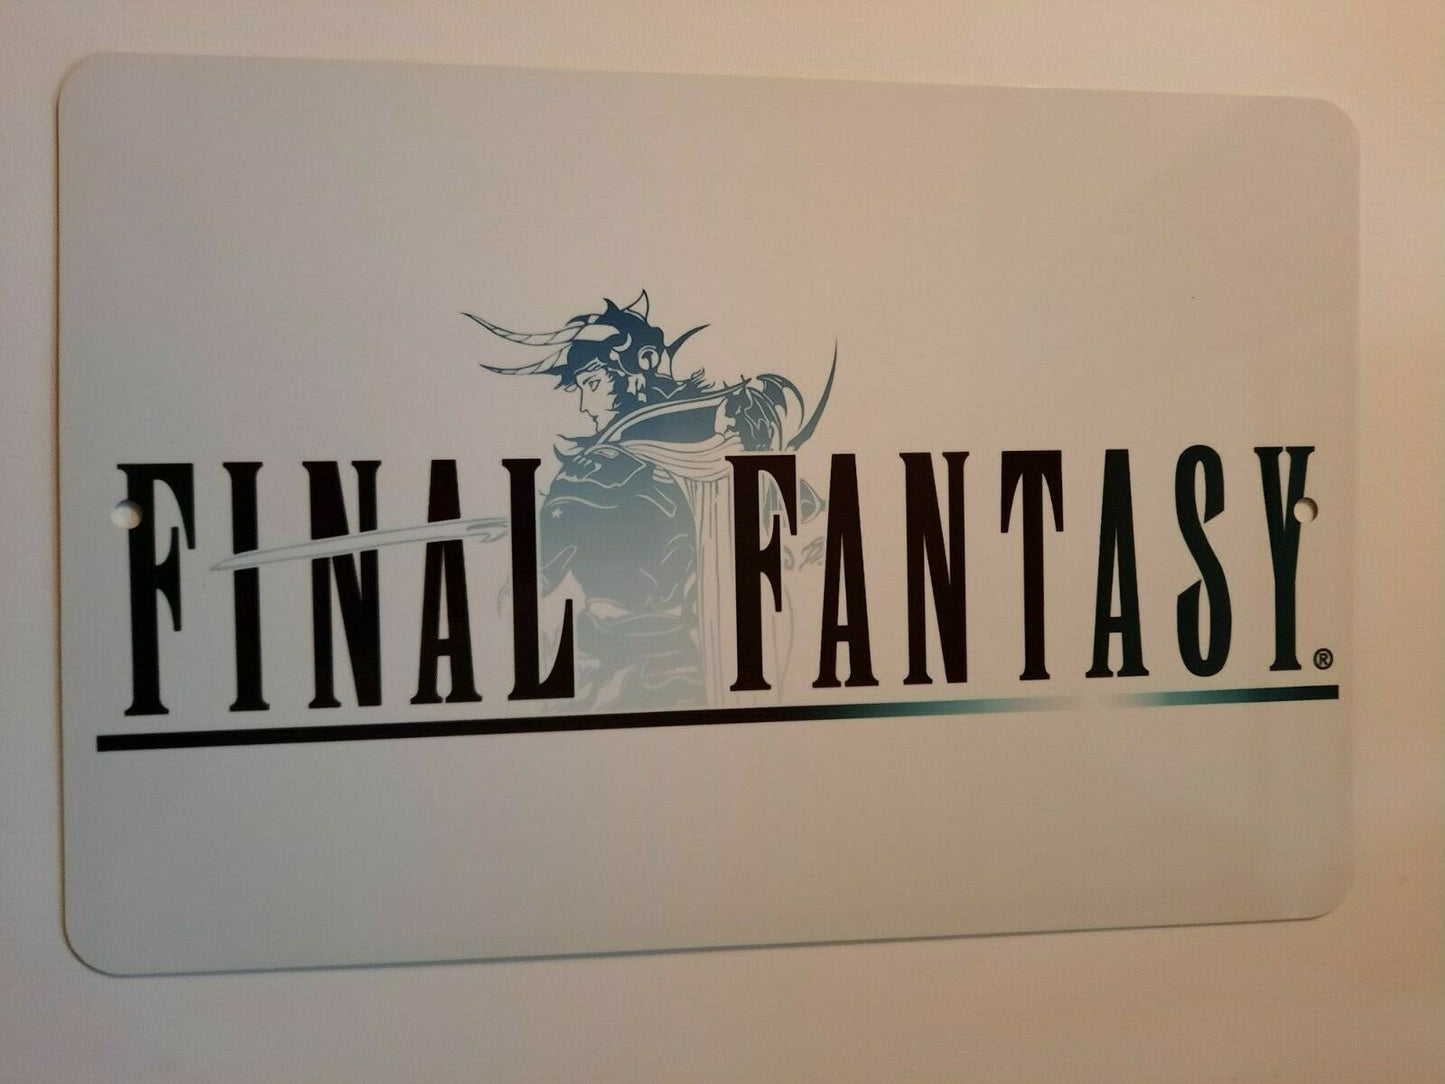 Final Fantasy FF Video Game 8x12 Metal Wall Sign Arcade